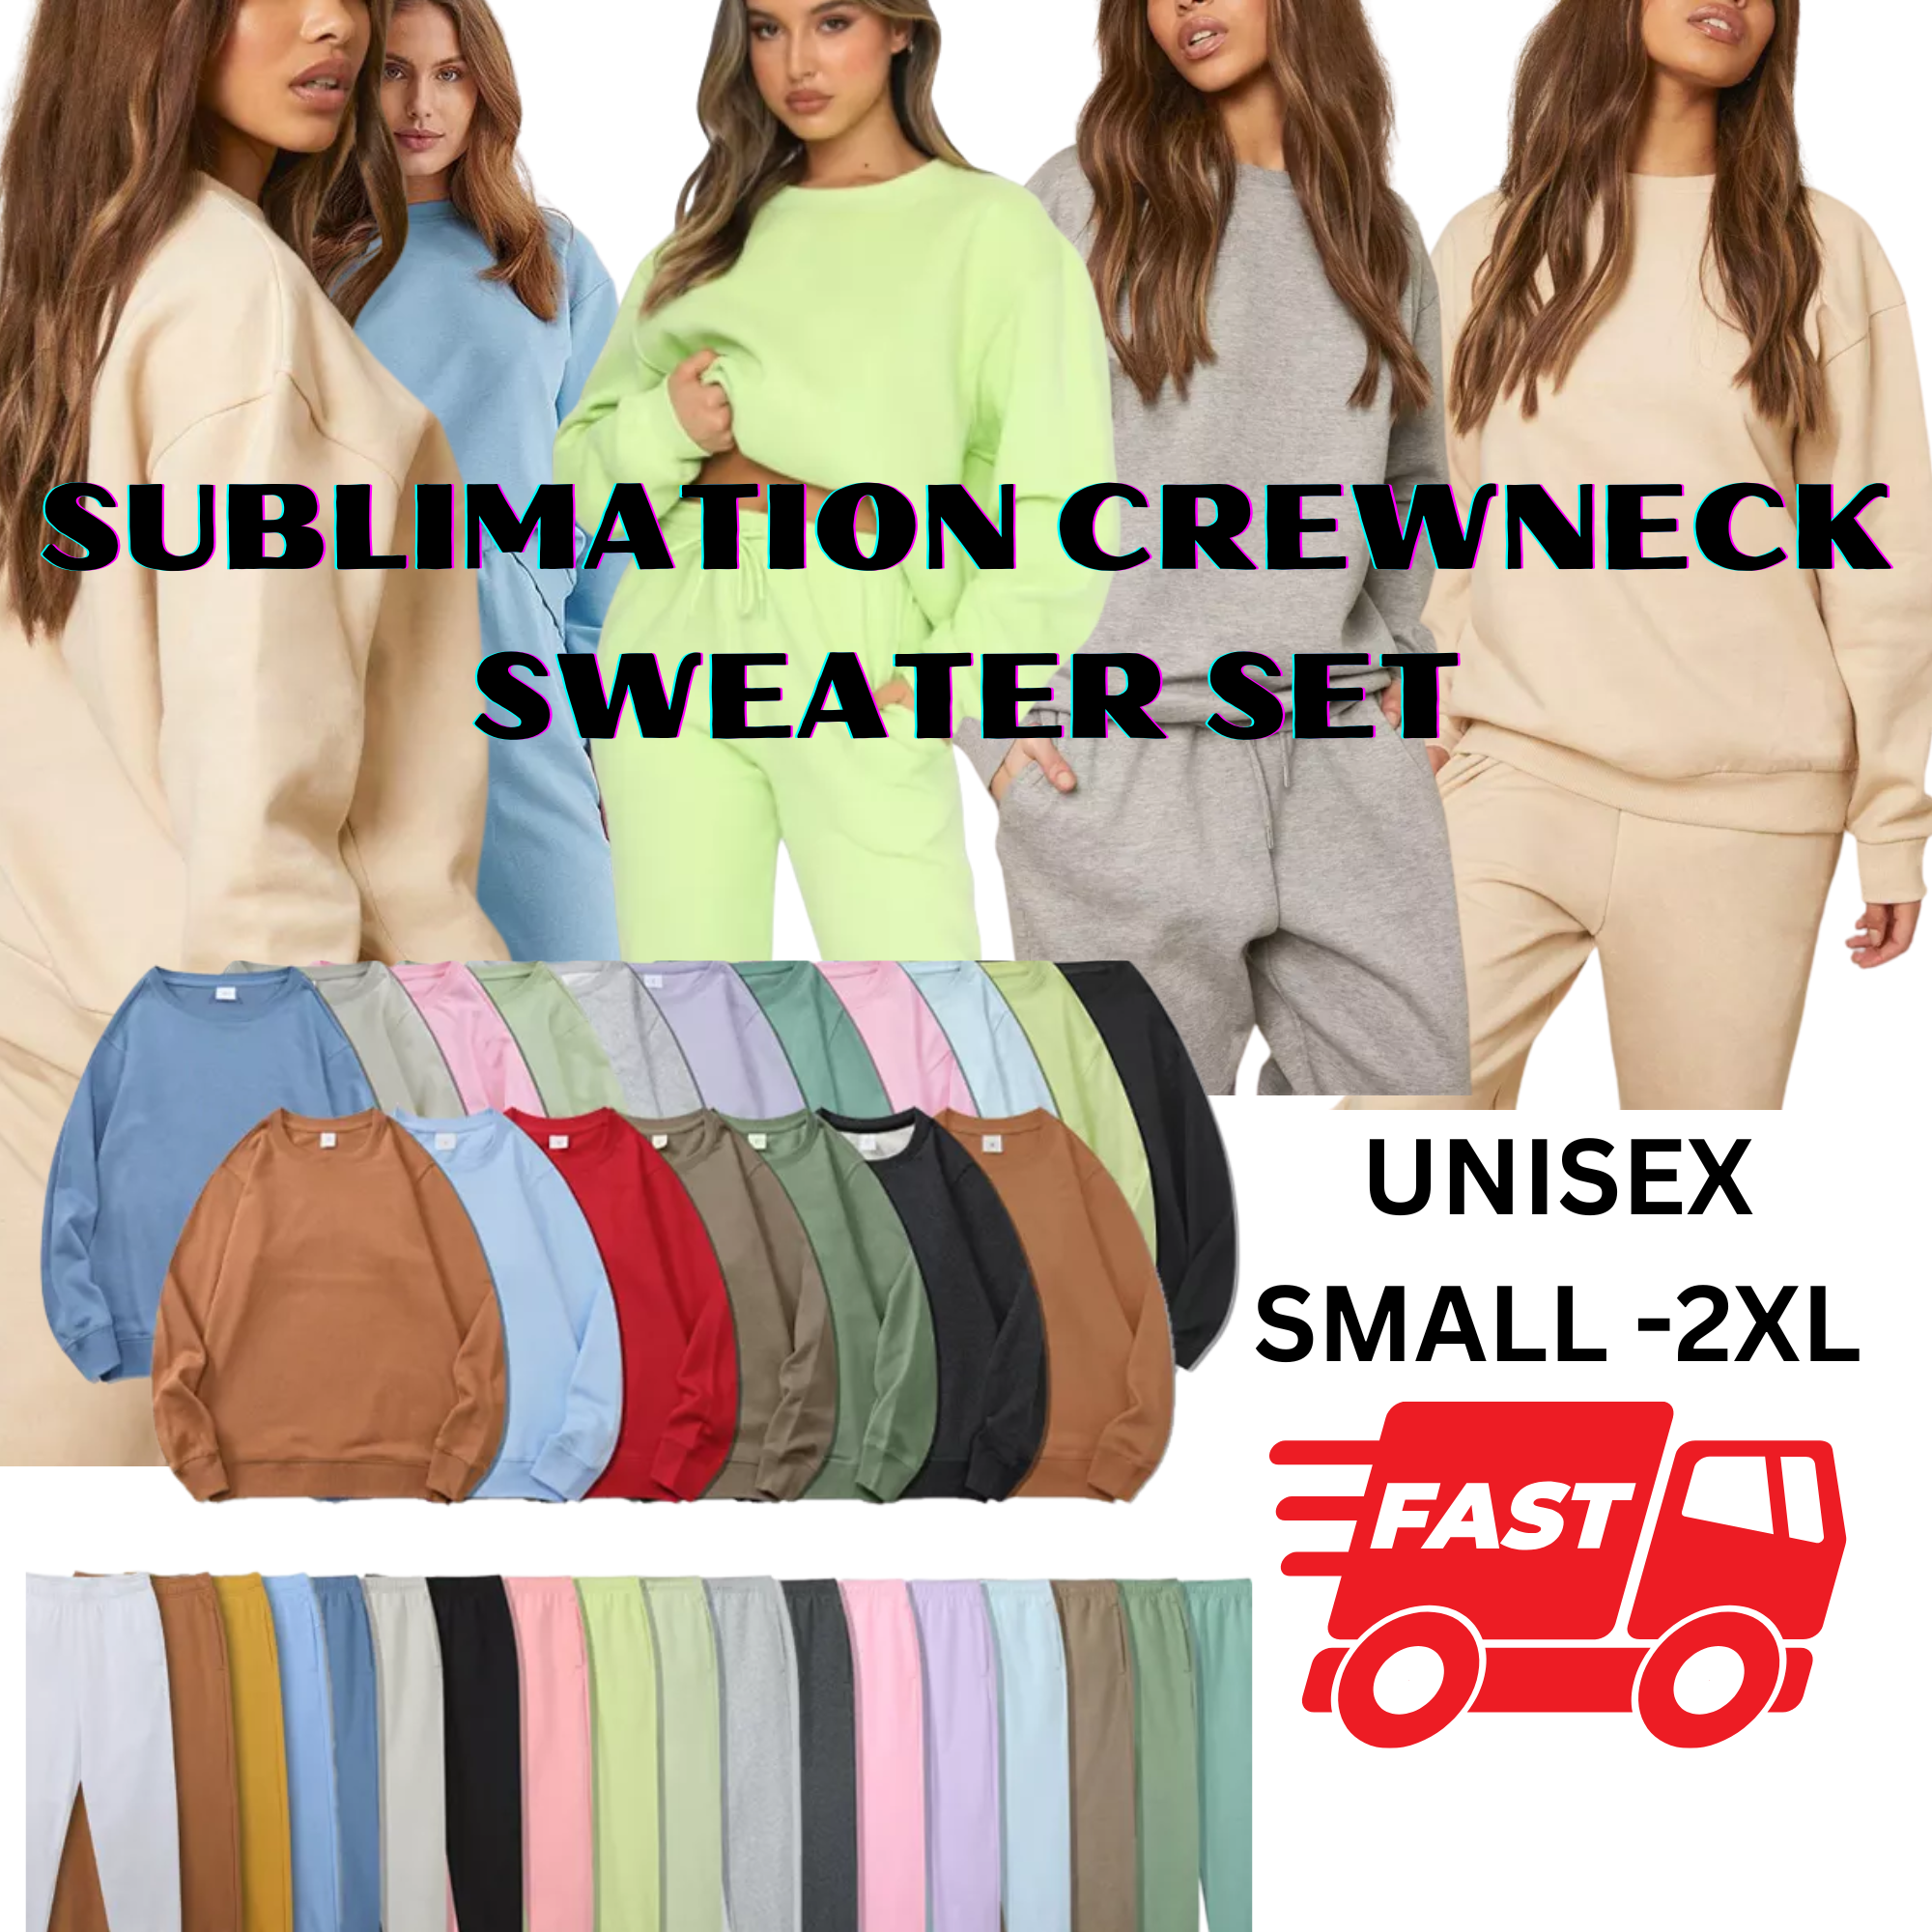 Sublimation Crewneck sweater set - SassyDame Designs,LLC